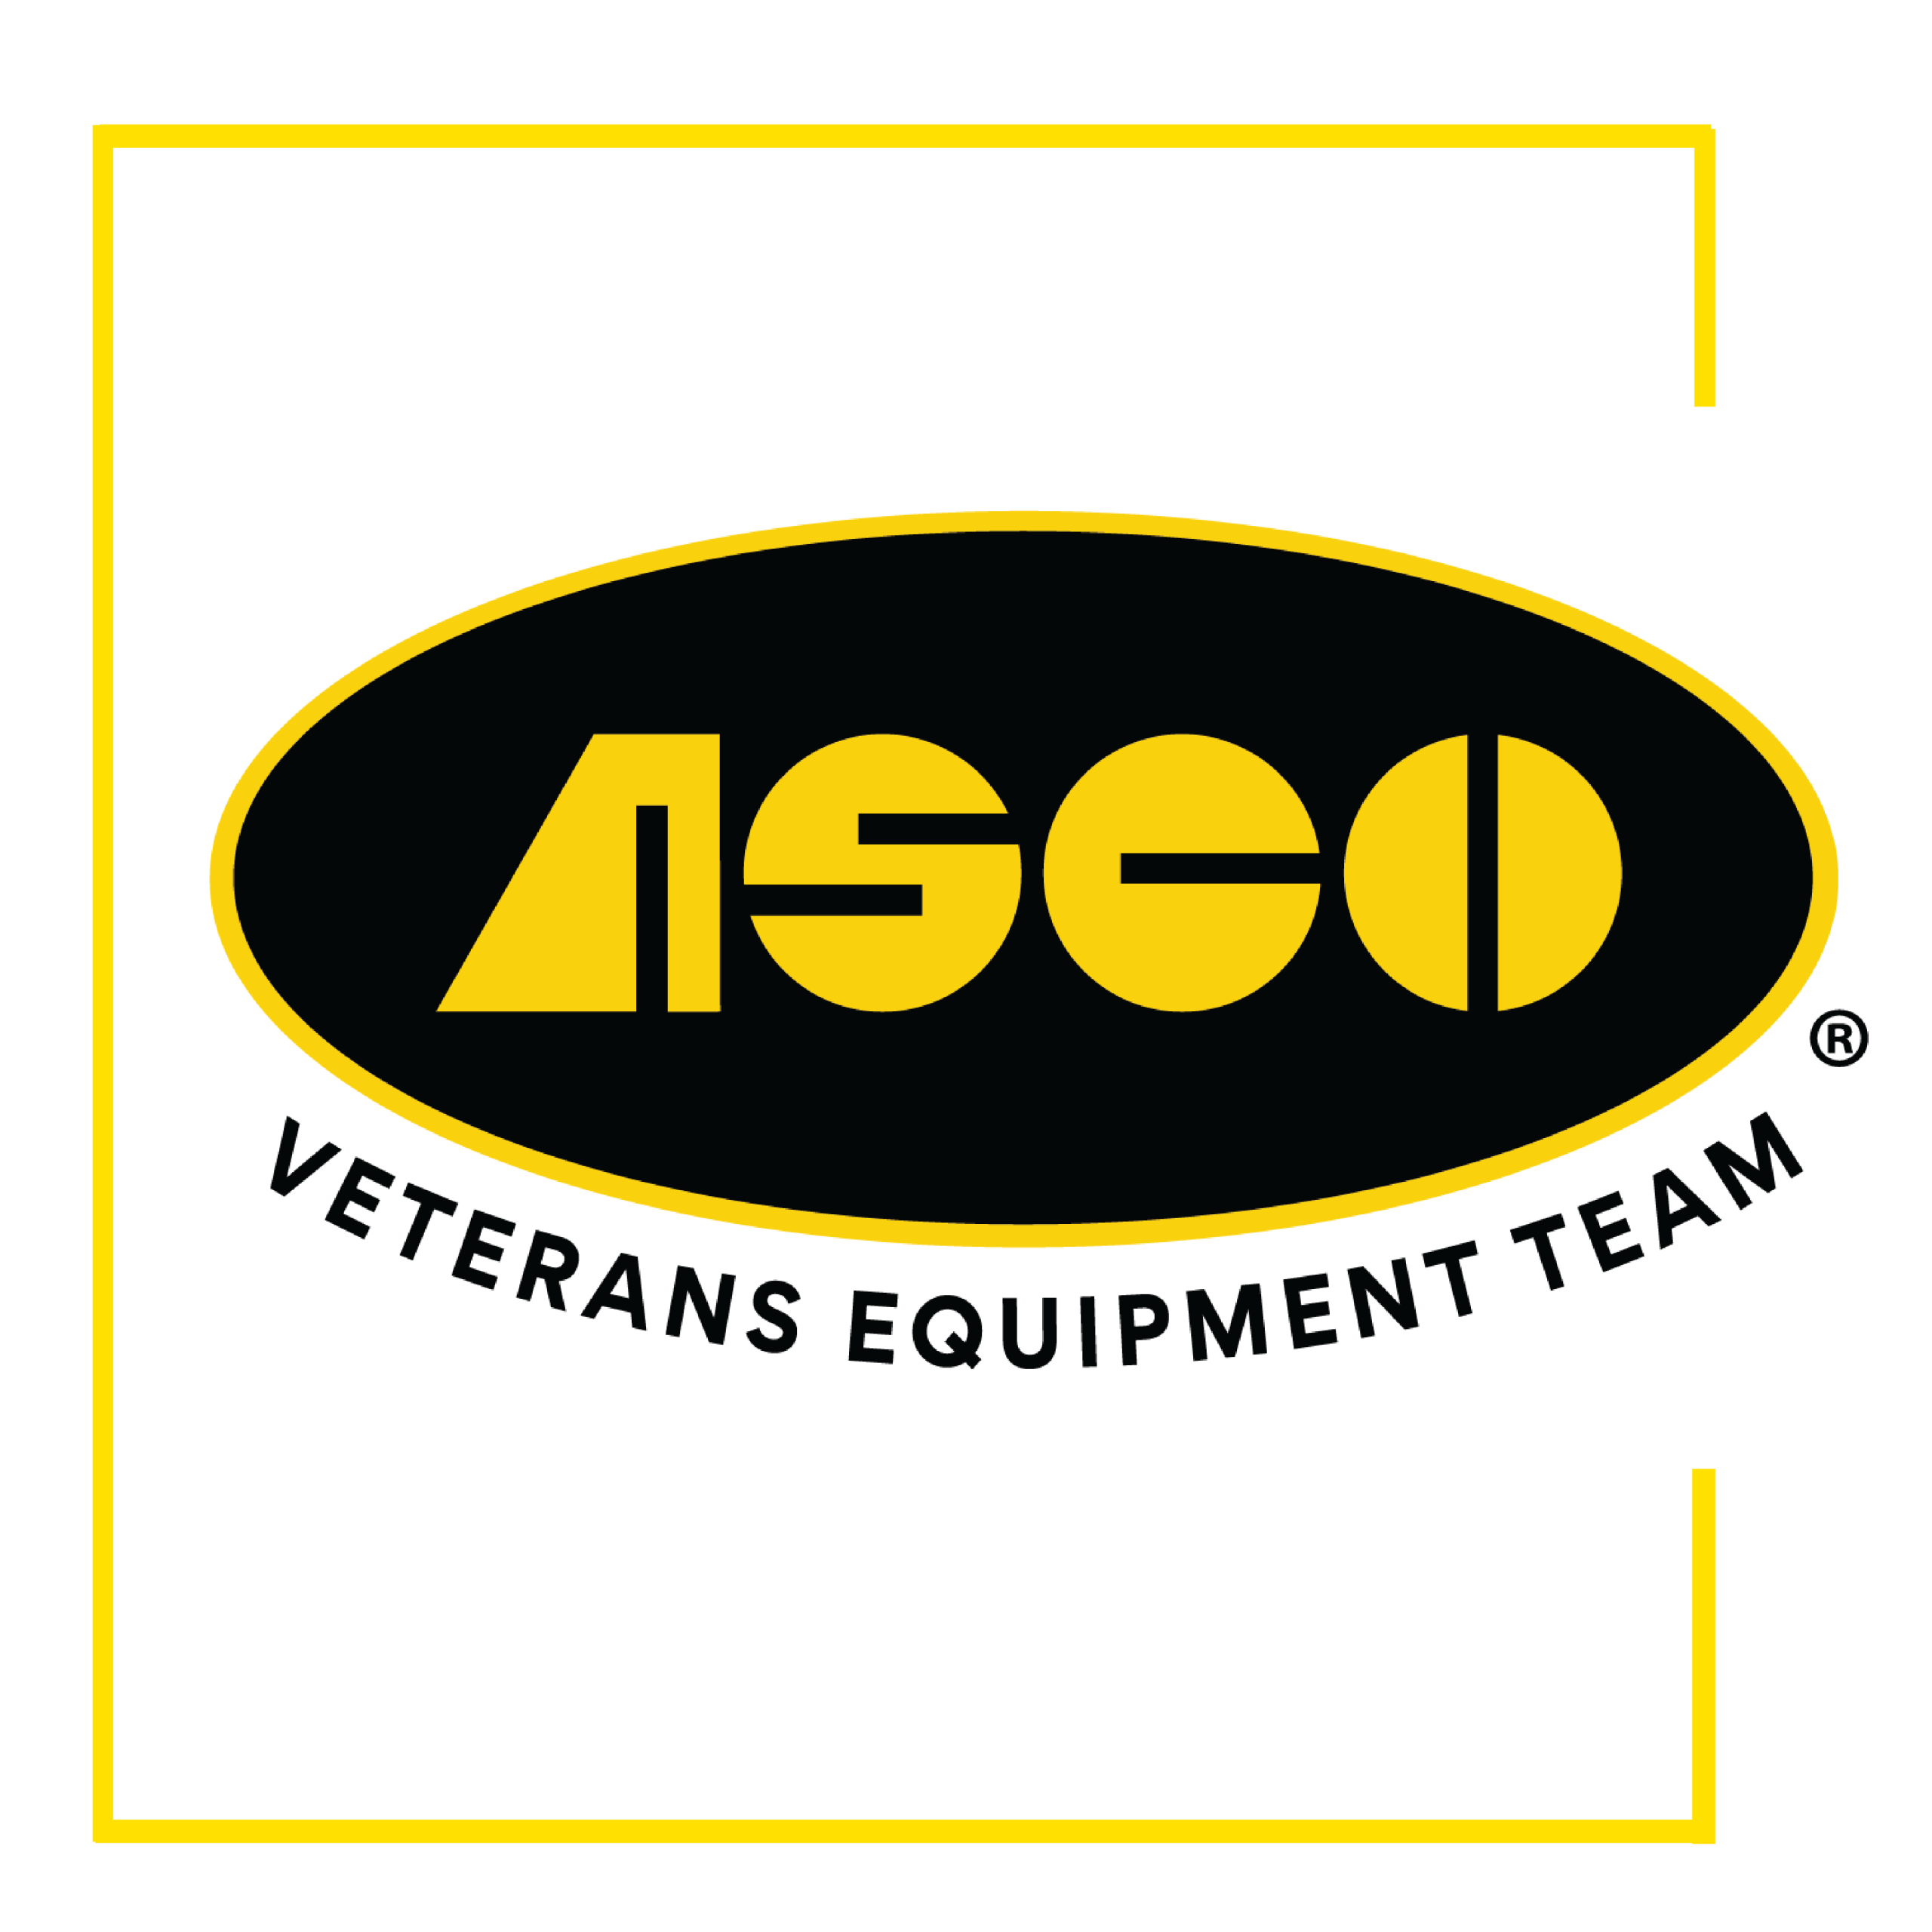 Veterans Equipment Team